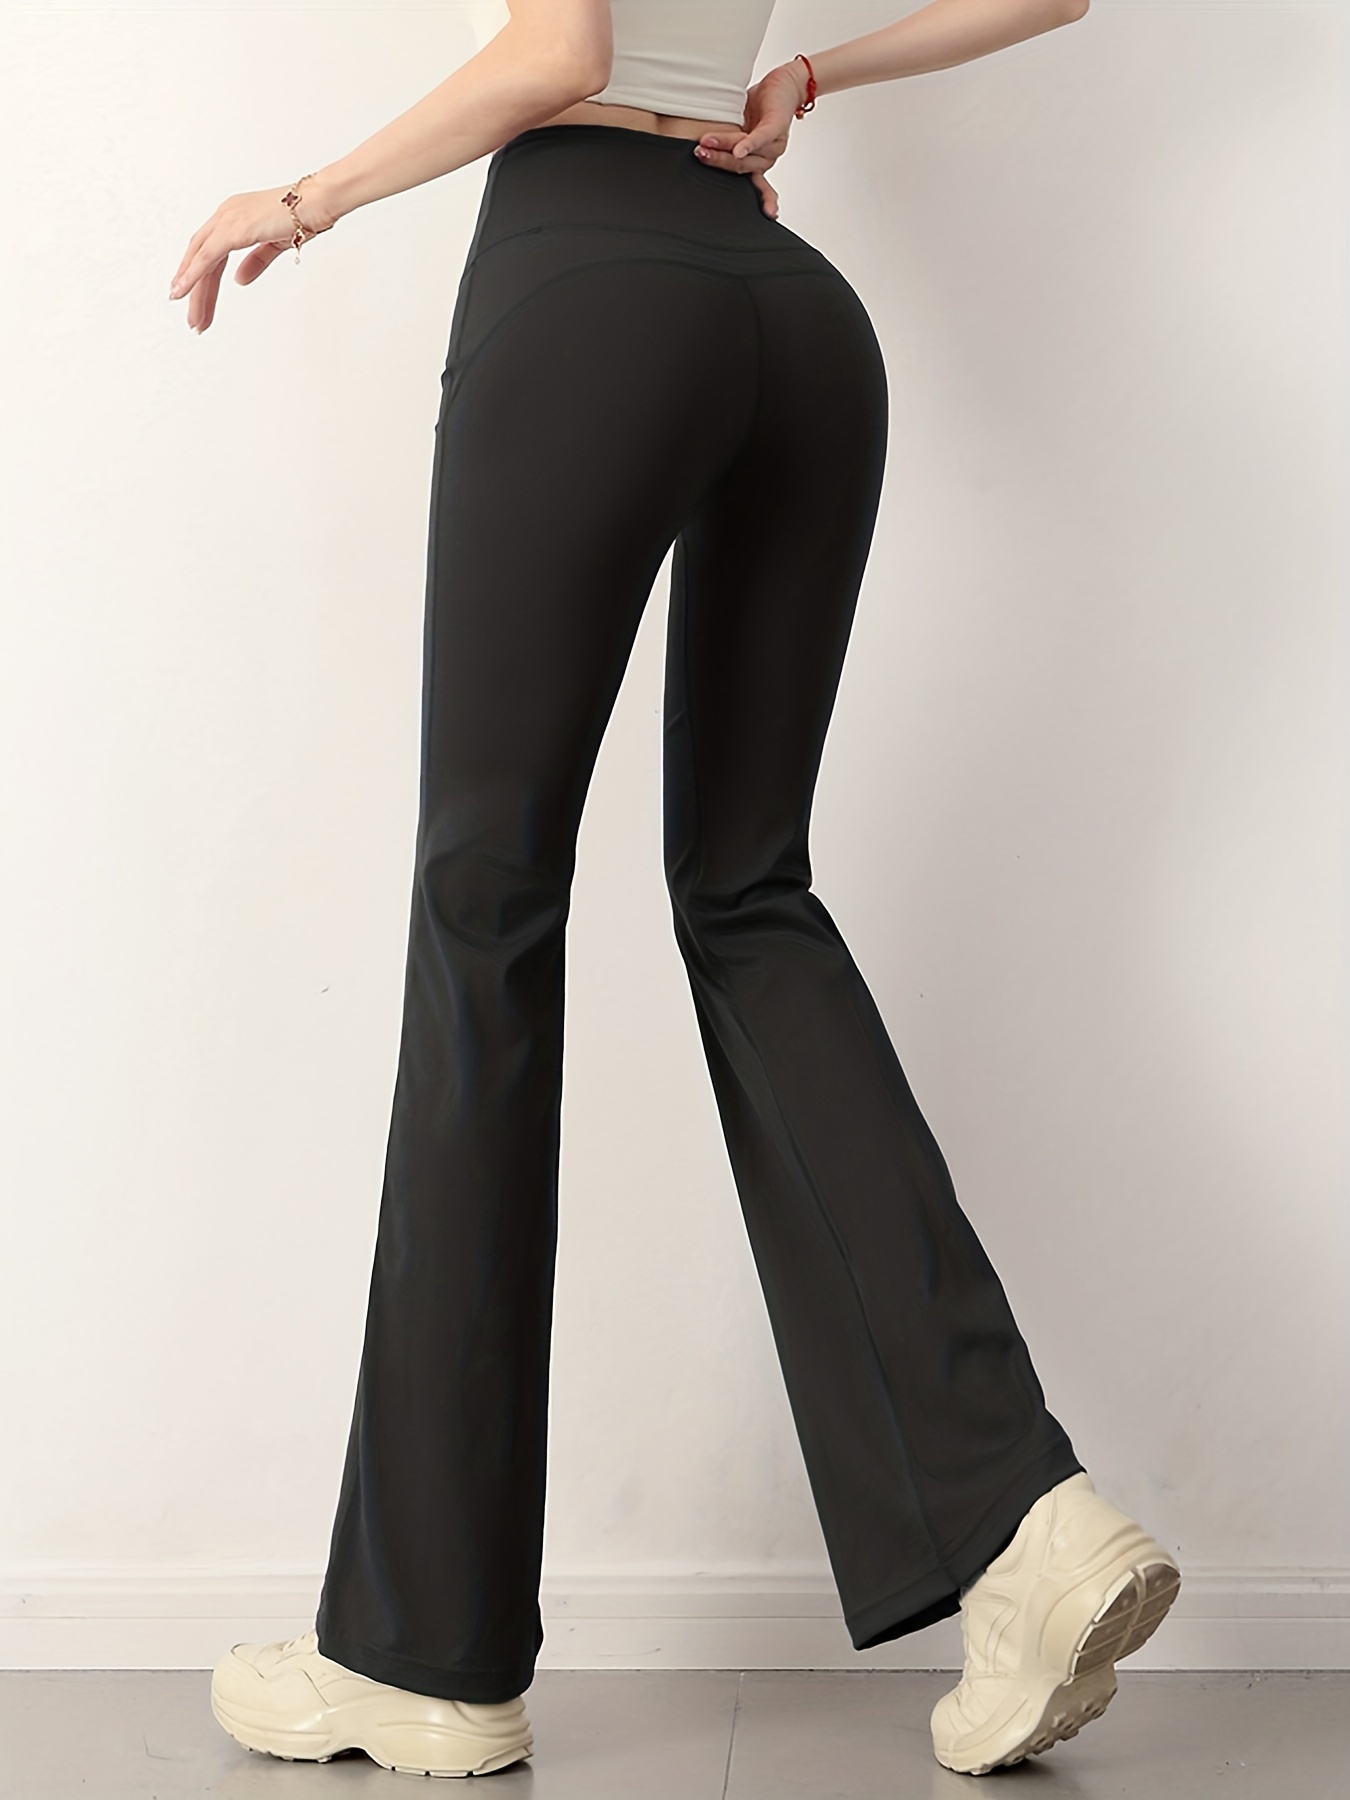 Women's Bootcut Yoga Pants High Waist Leggings Stretch Tummy Control  Flare Pants | eBay